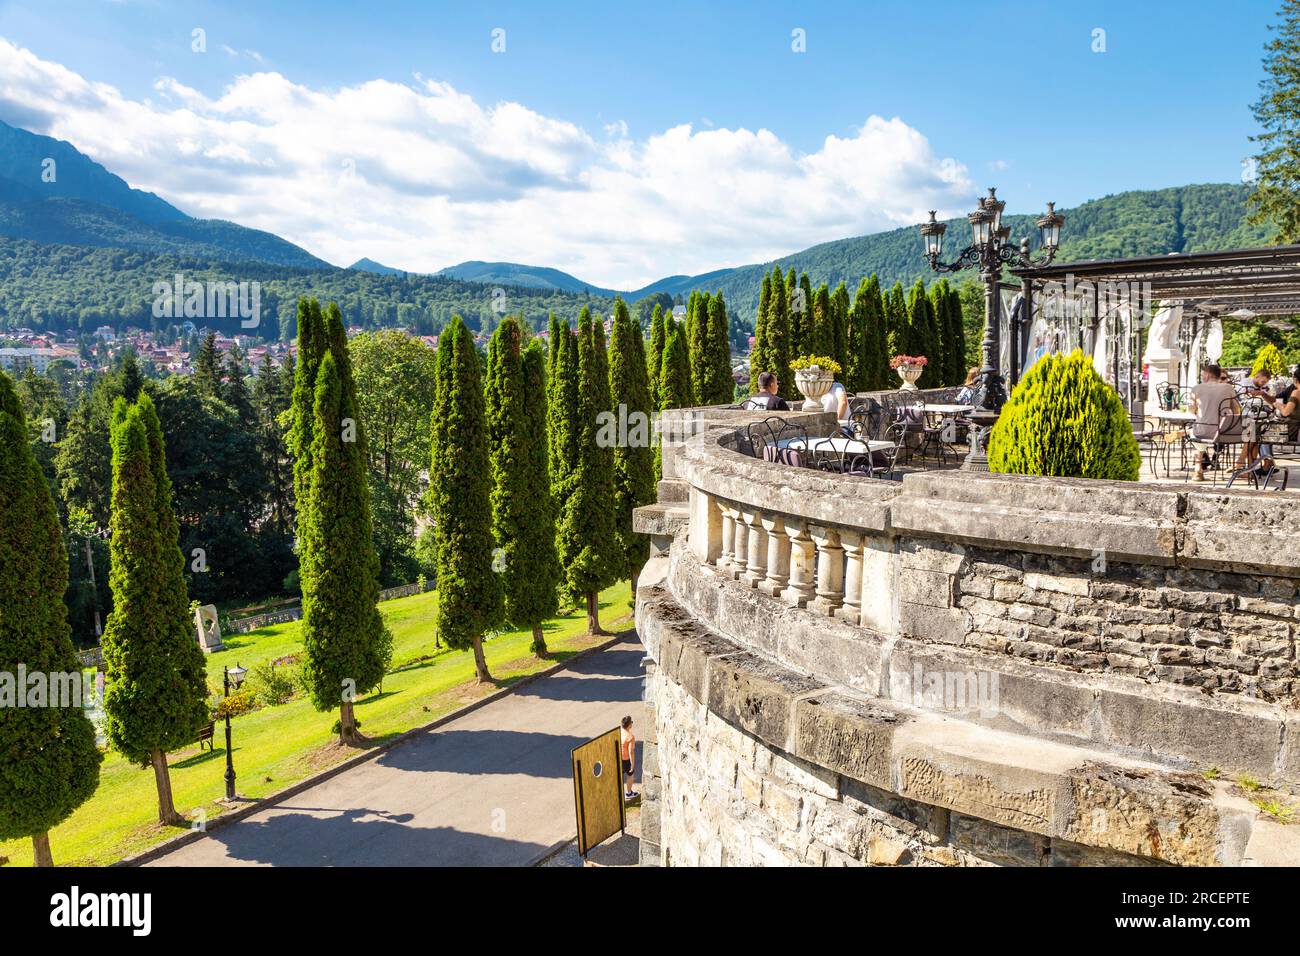 Canta Cuisine Restaurant terrace at Cantacuzino Castle overlooking Bucegi Mountains, Busteni, Romania Stock Photo